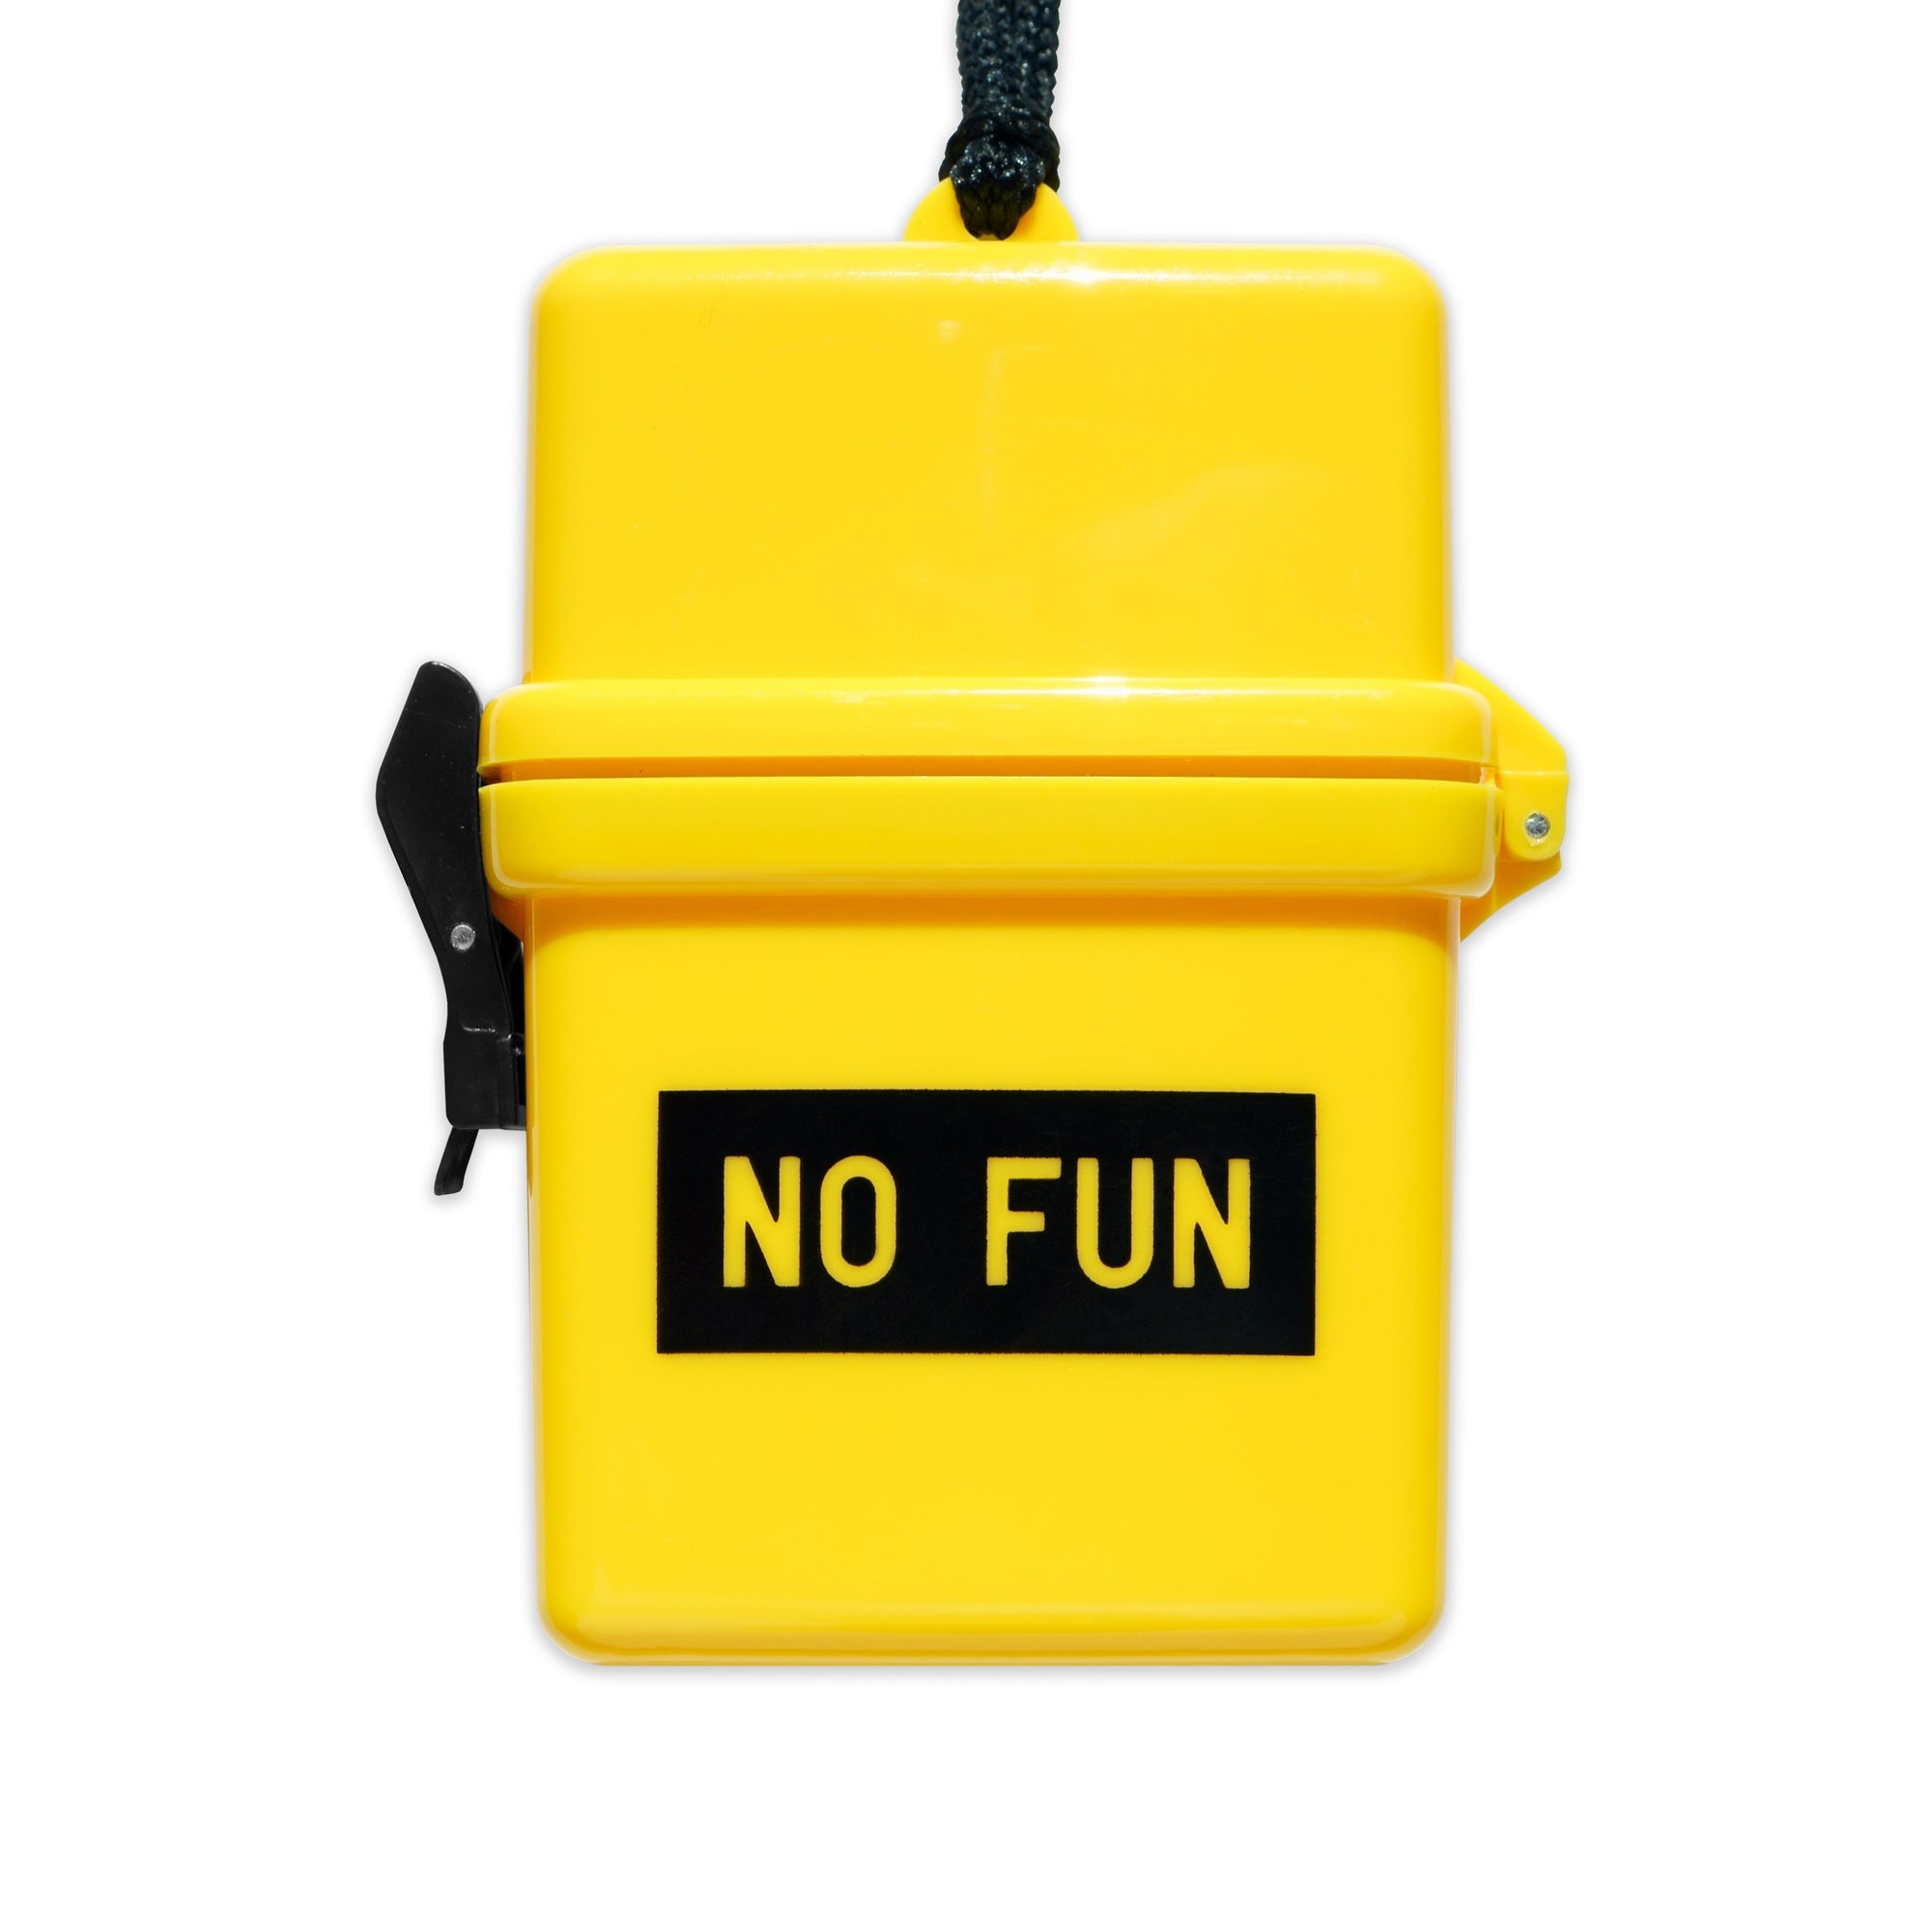 No Fun Press - Signature Waterproof Container - Yellow